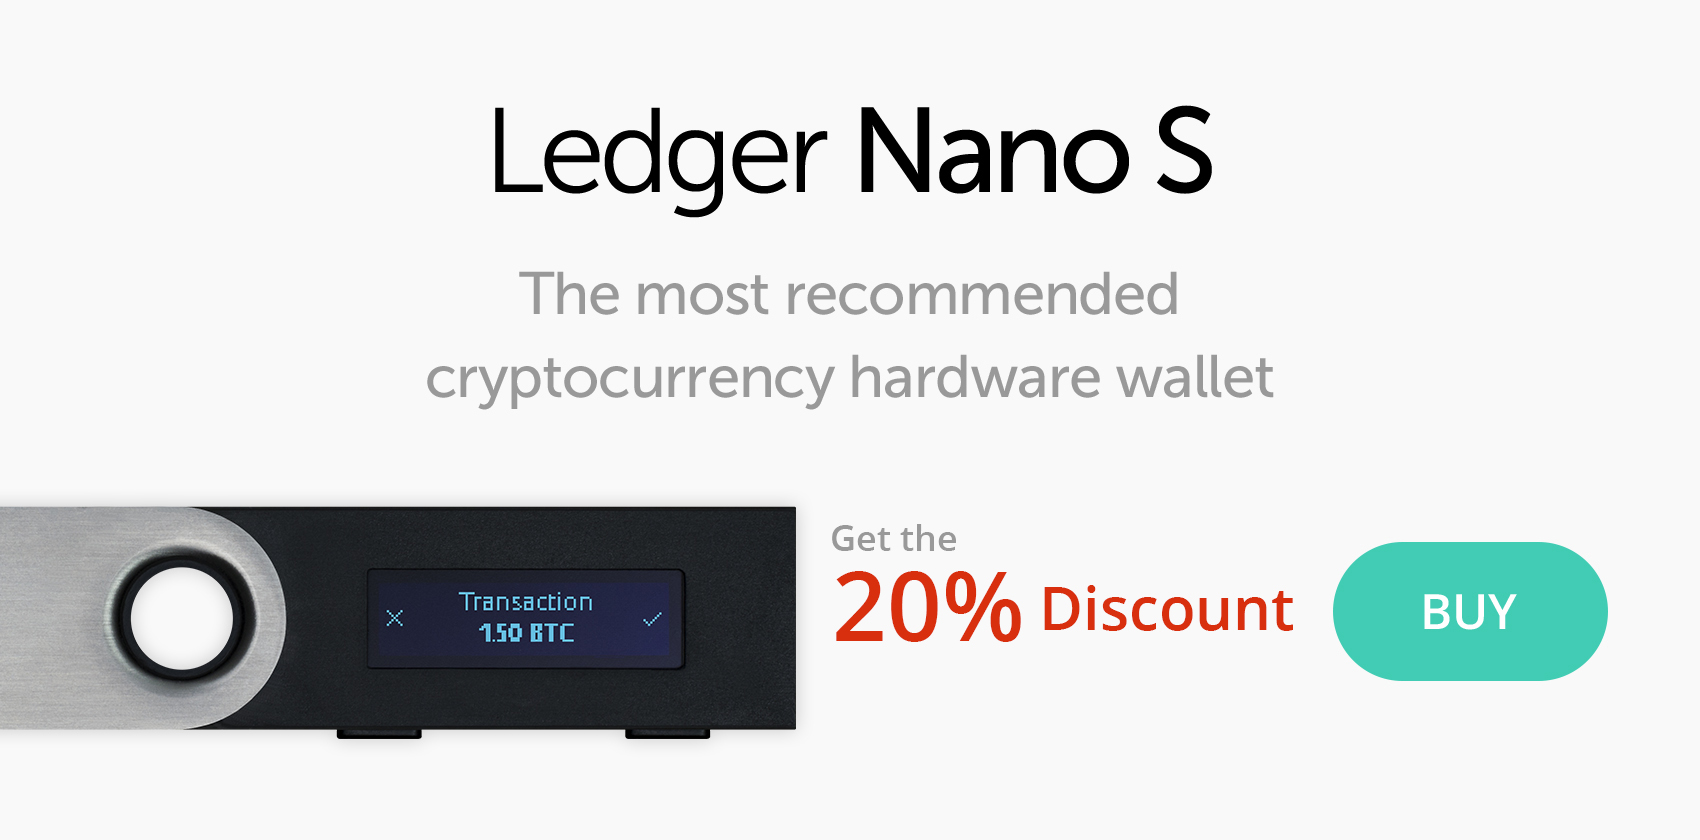 How To Buy Bitcoin Using Ledger Nano S | Make Money ...